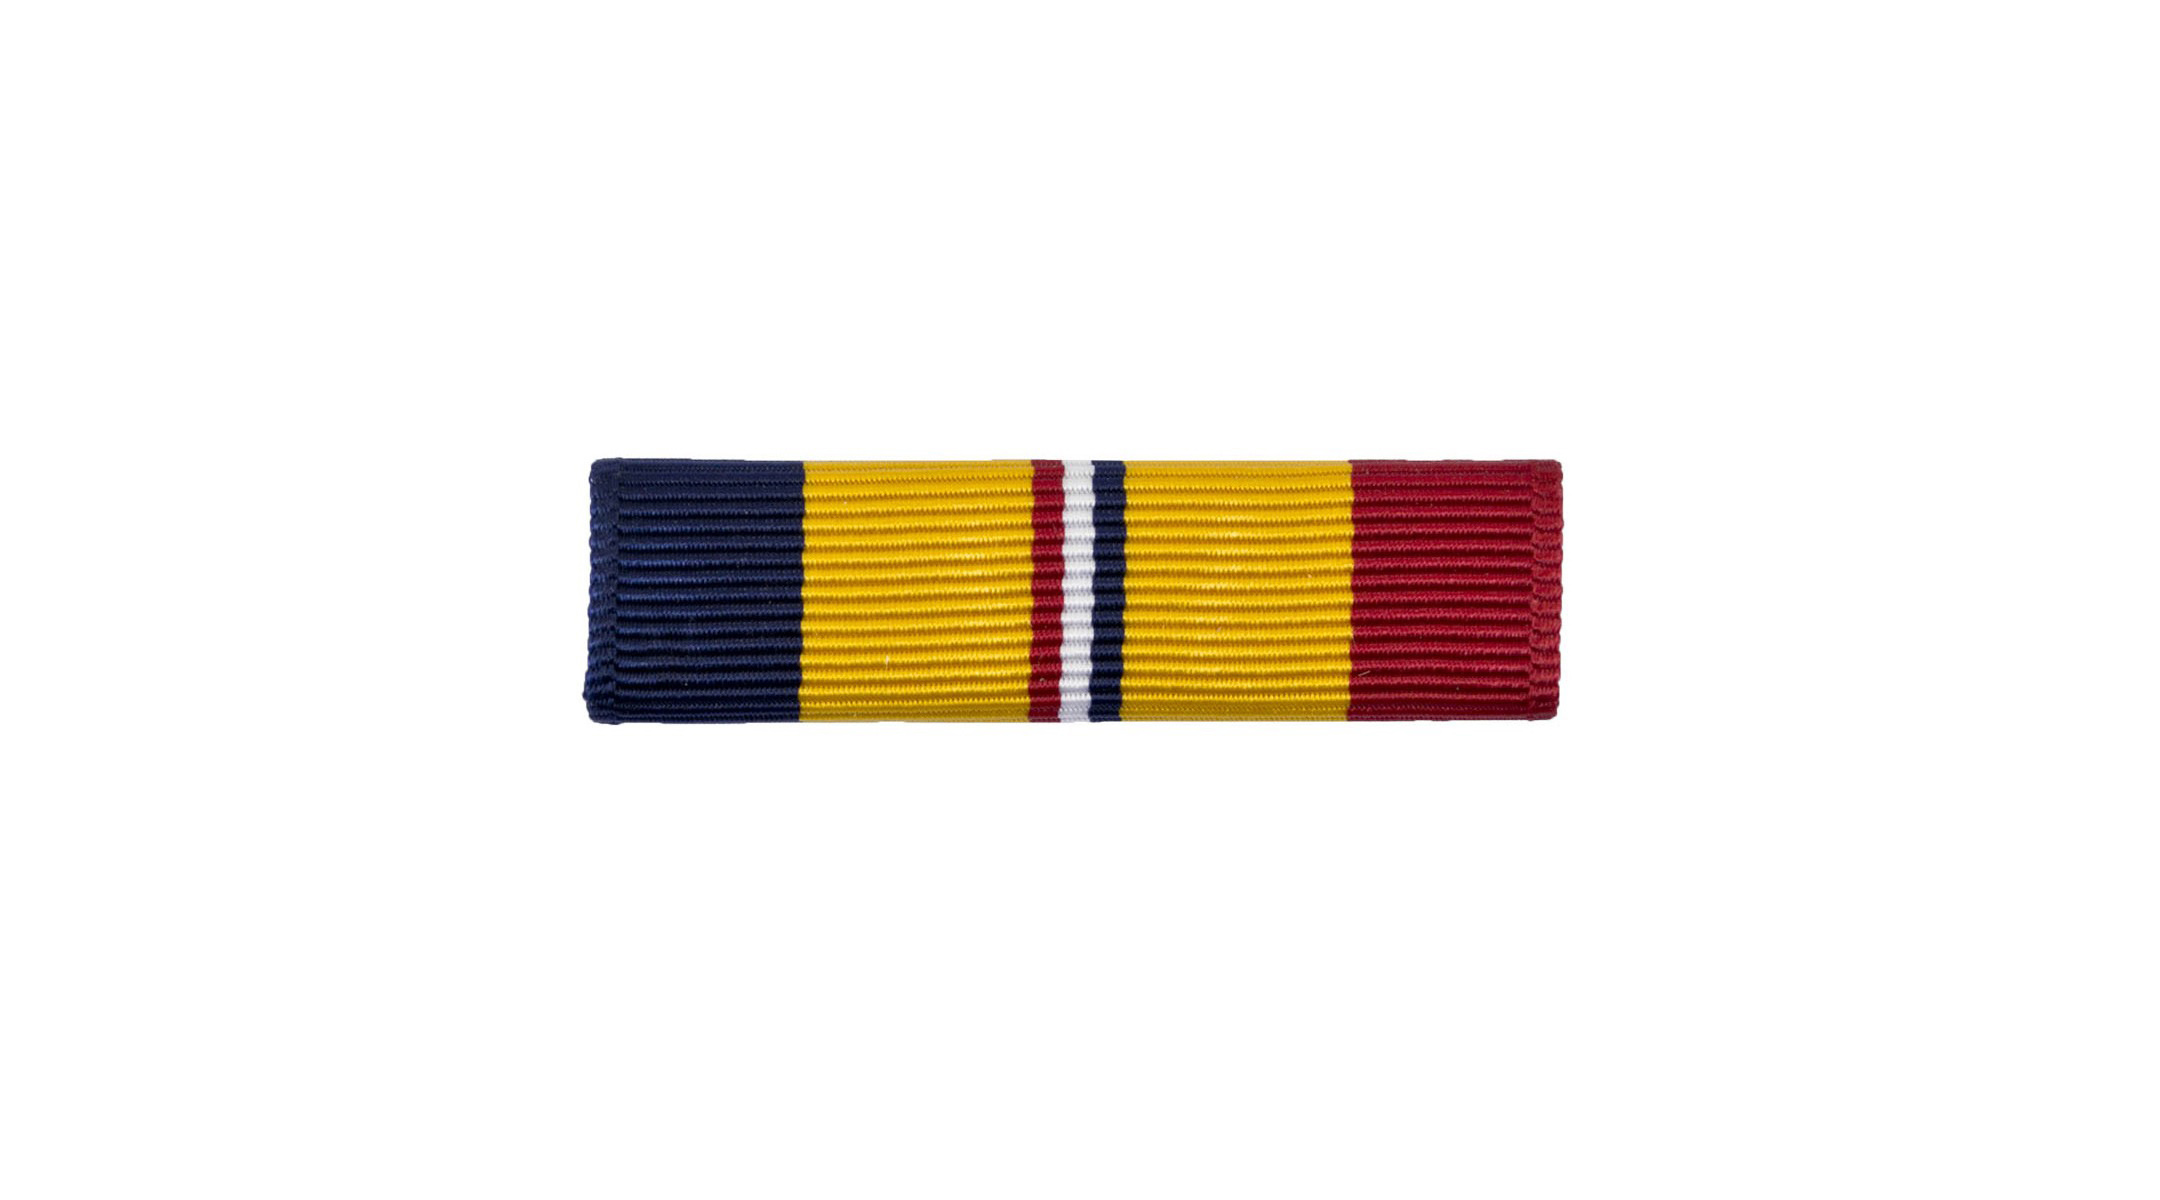 USAMM - Armed Forces Reserve Medal - Air Force Version